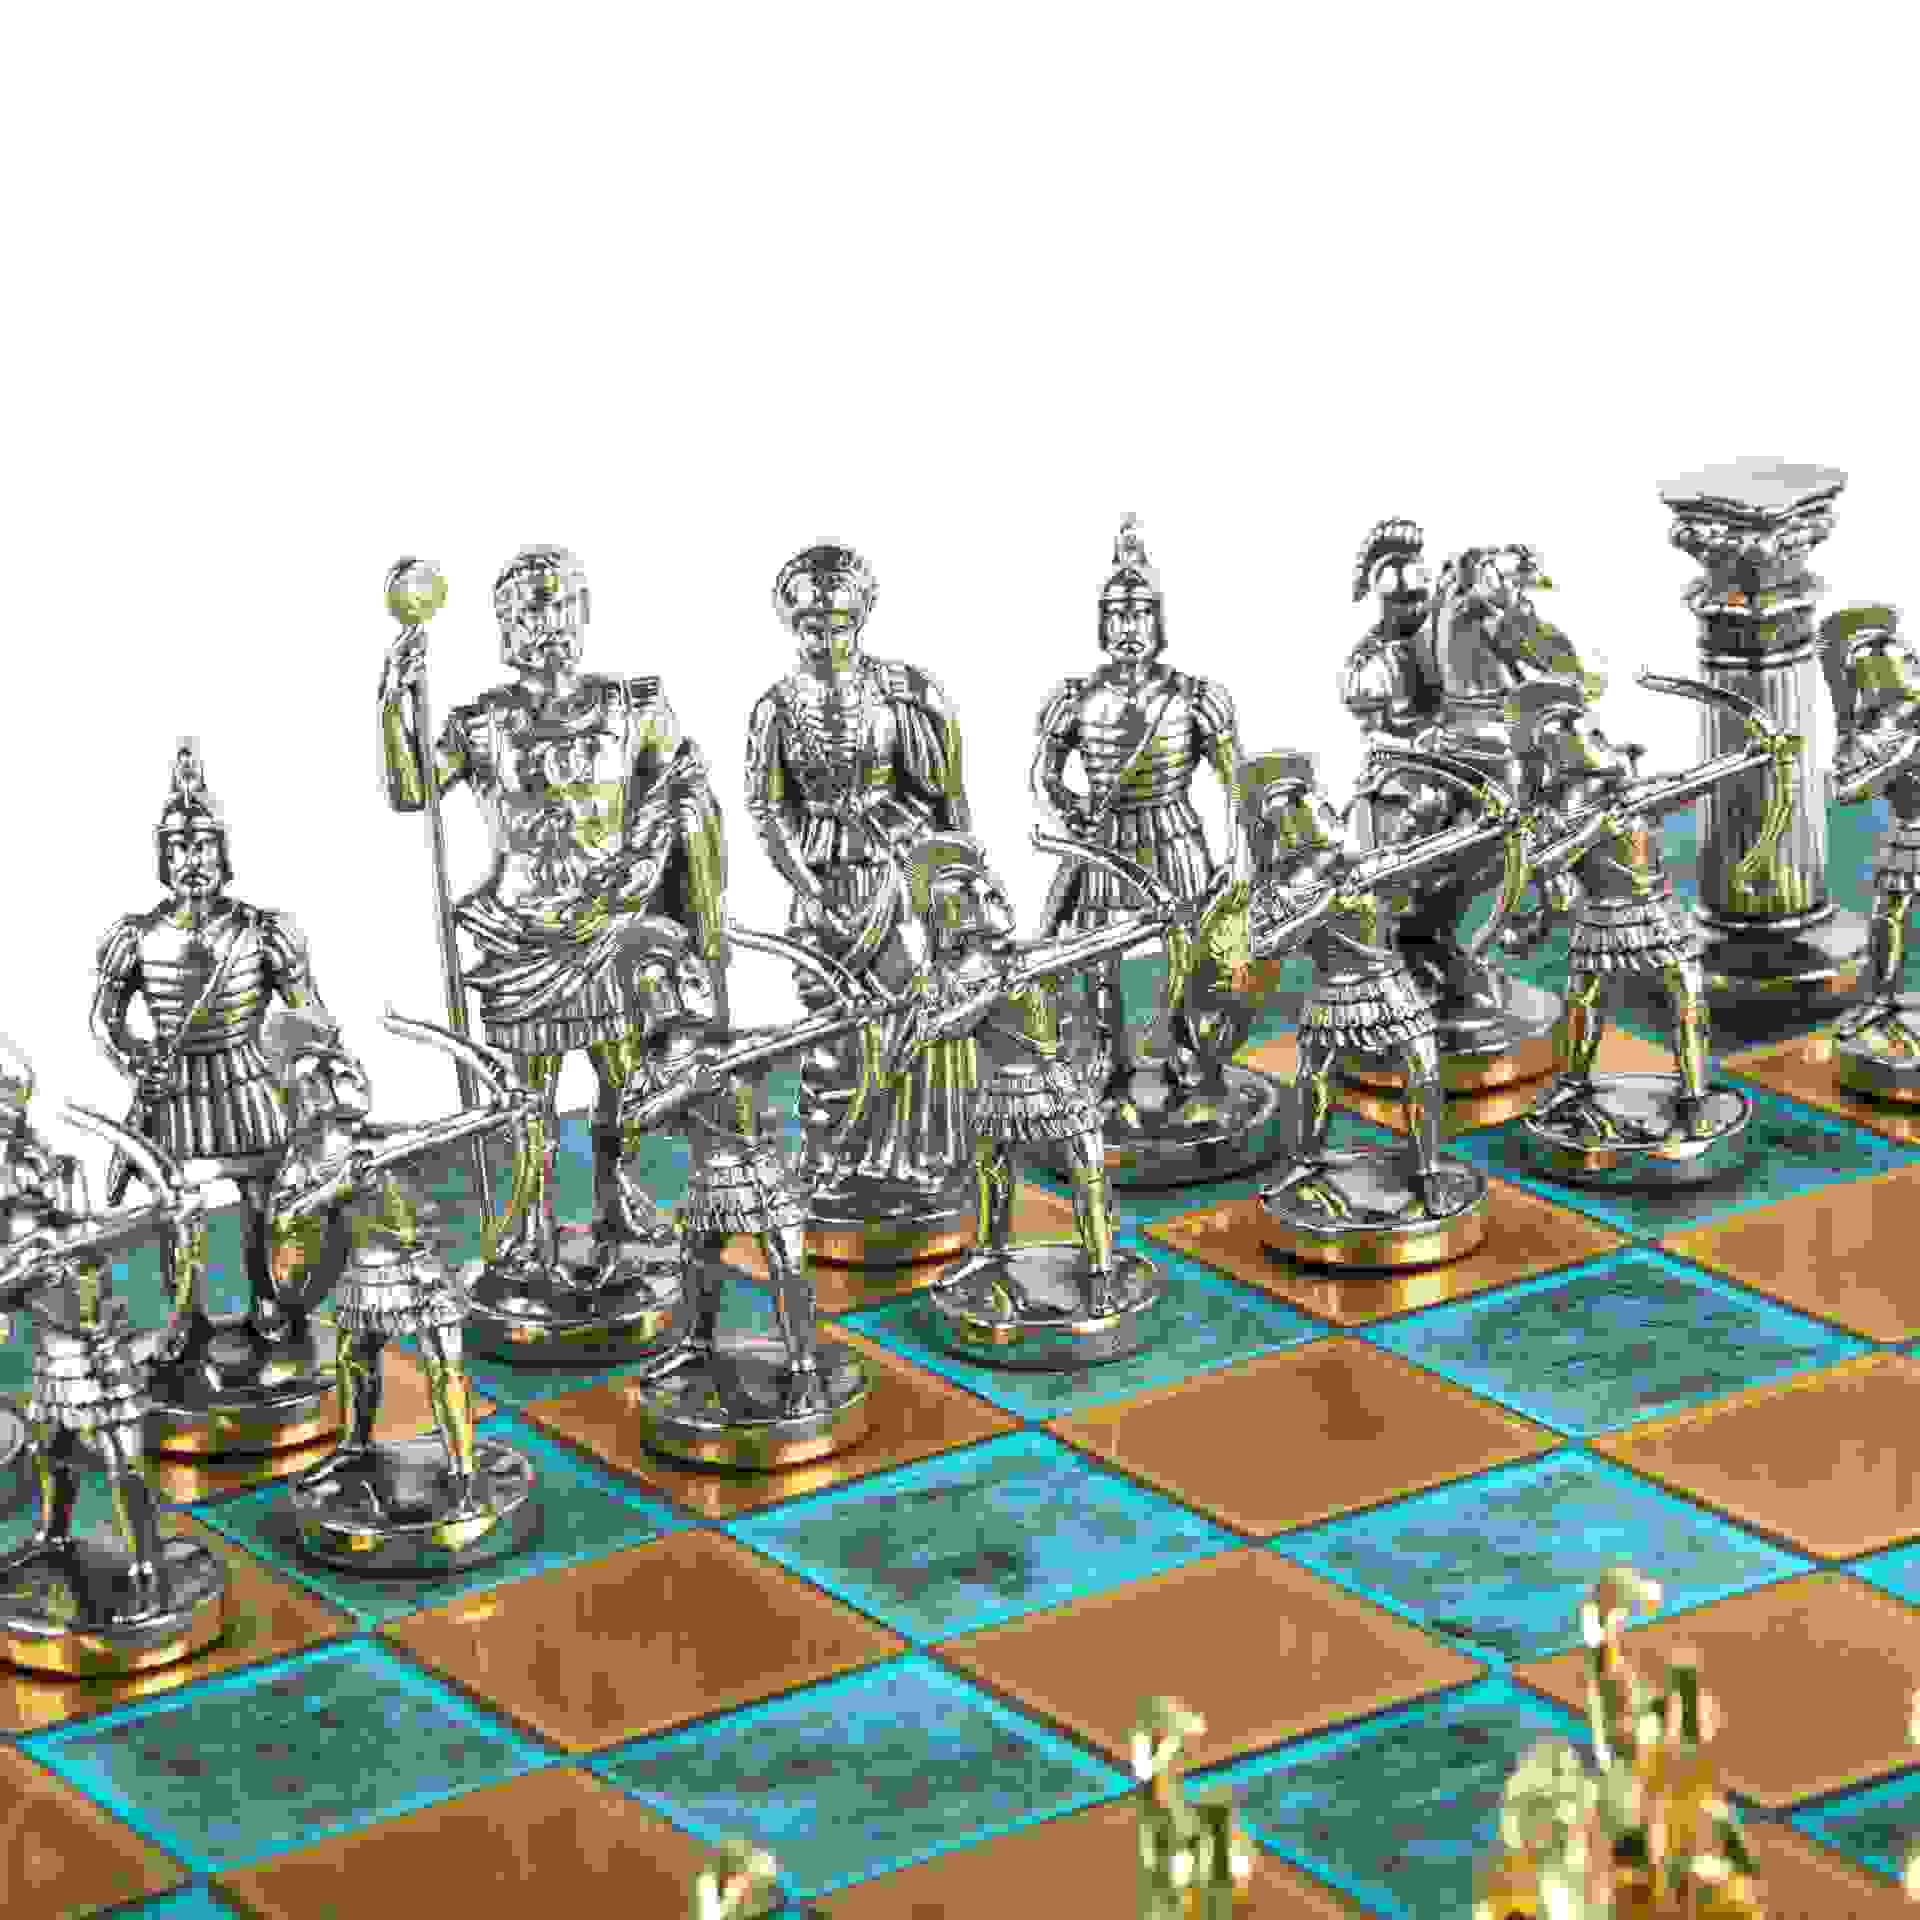 Archers Metal Chess Set 28x28cm Turquoise Patina